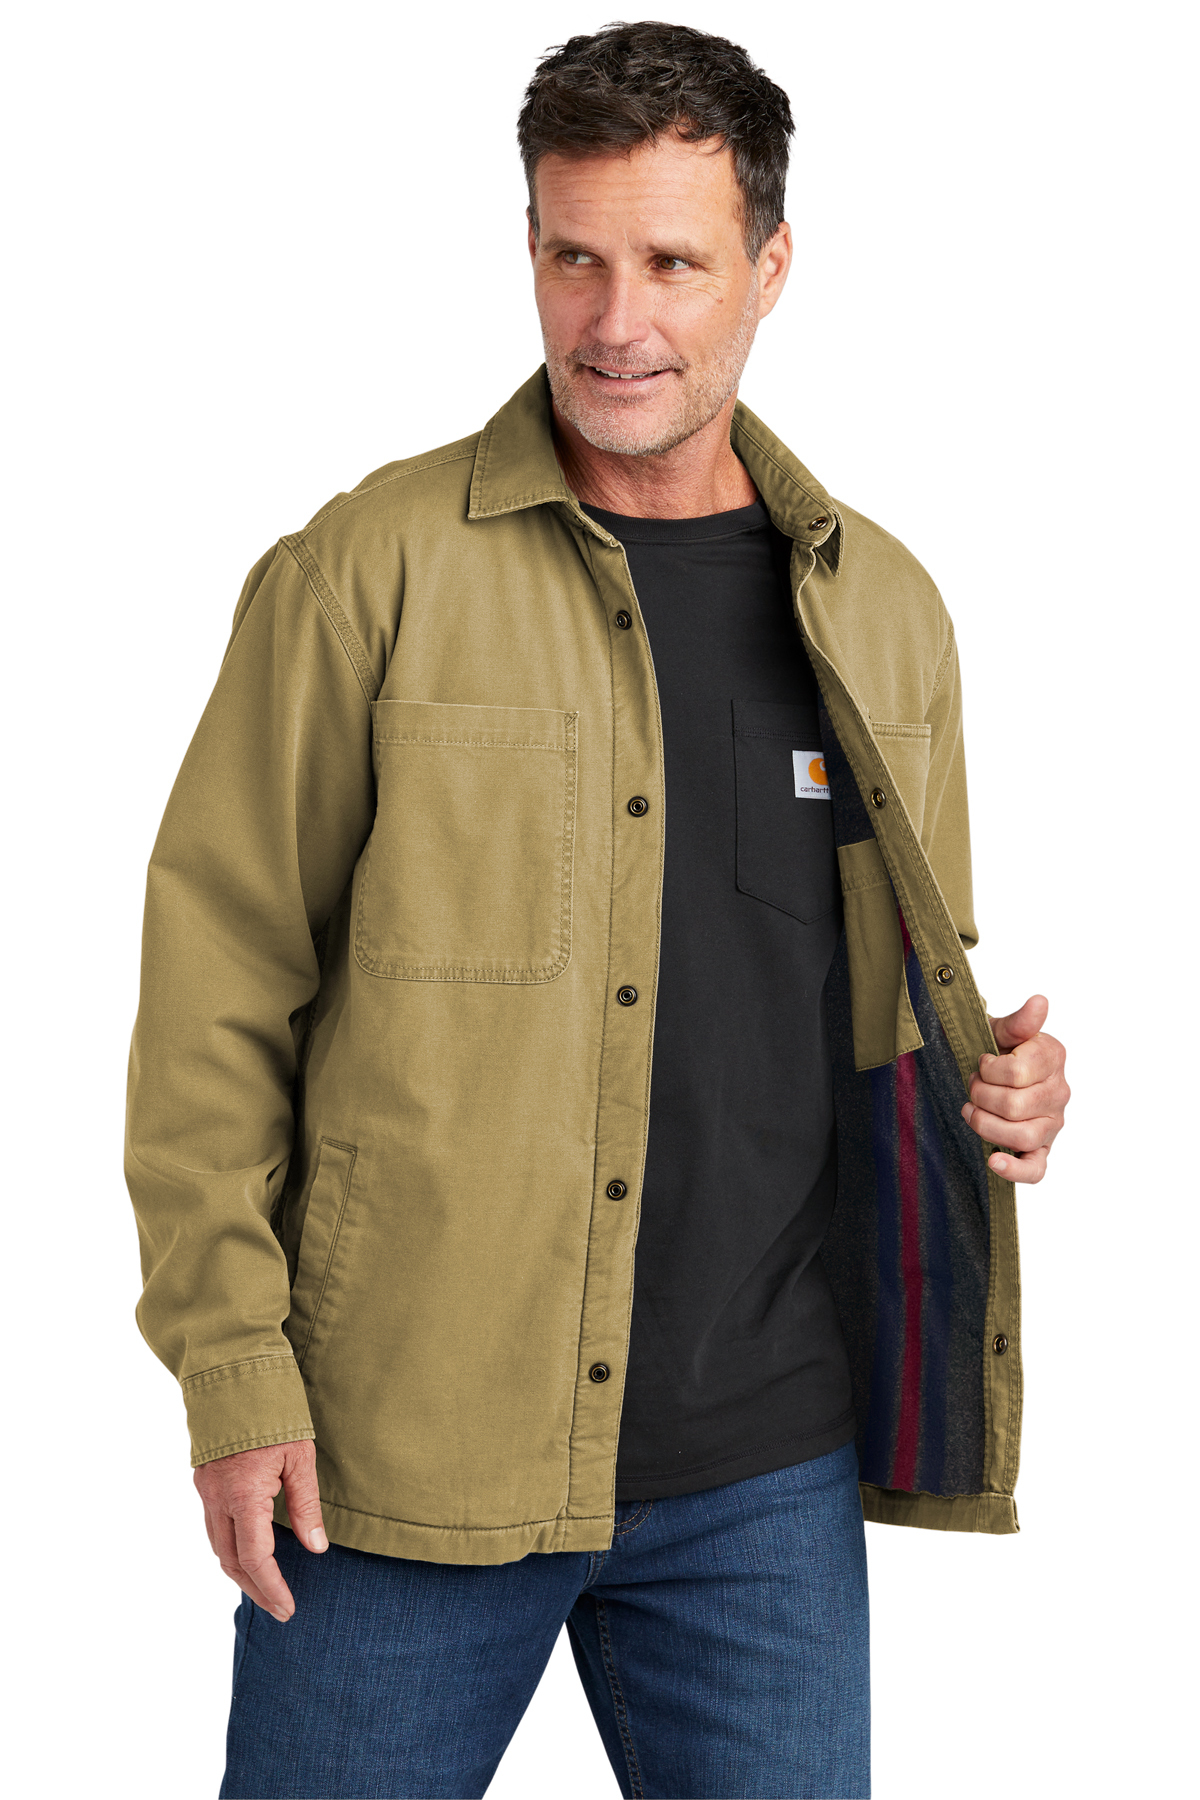 Carhartt Rugged Flex Fleece-Lined Shirt Jac | Product | Company Casuals